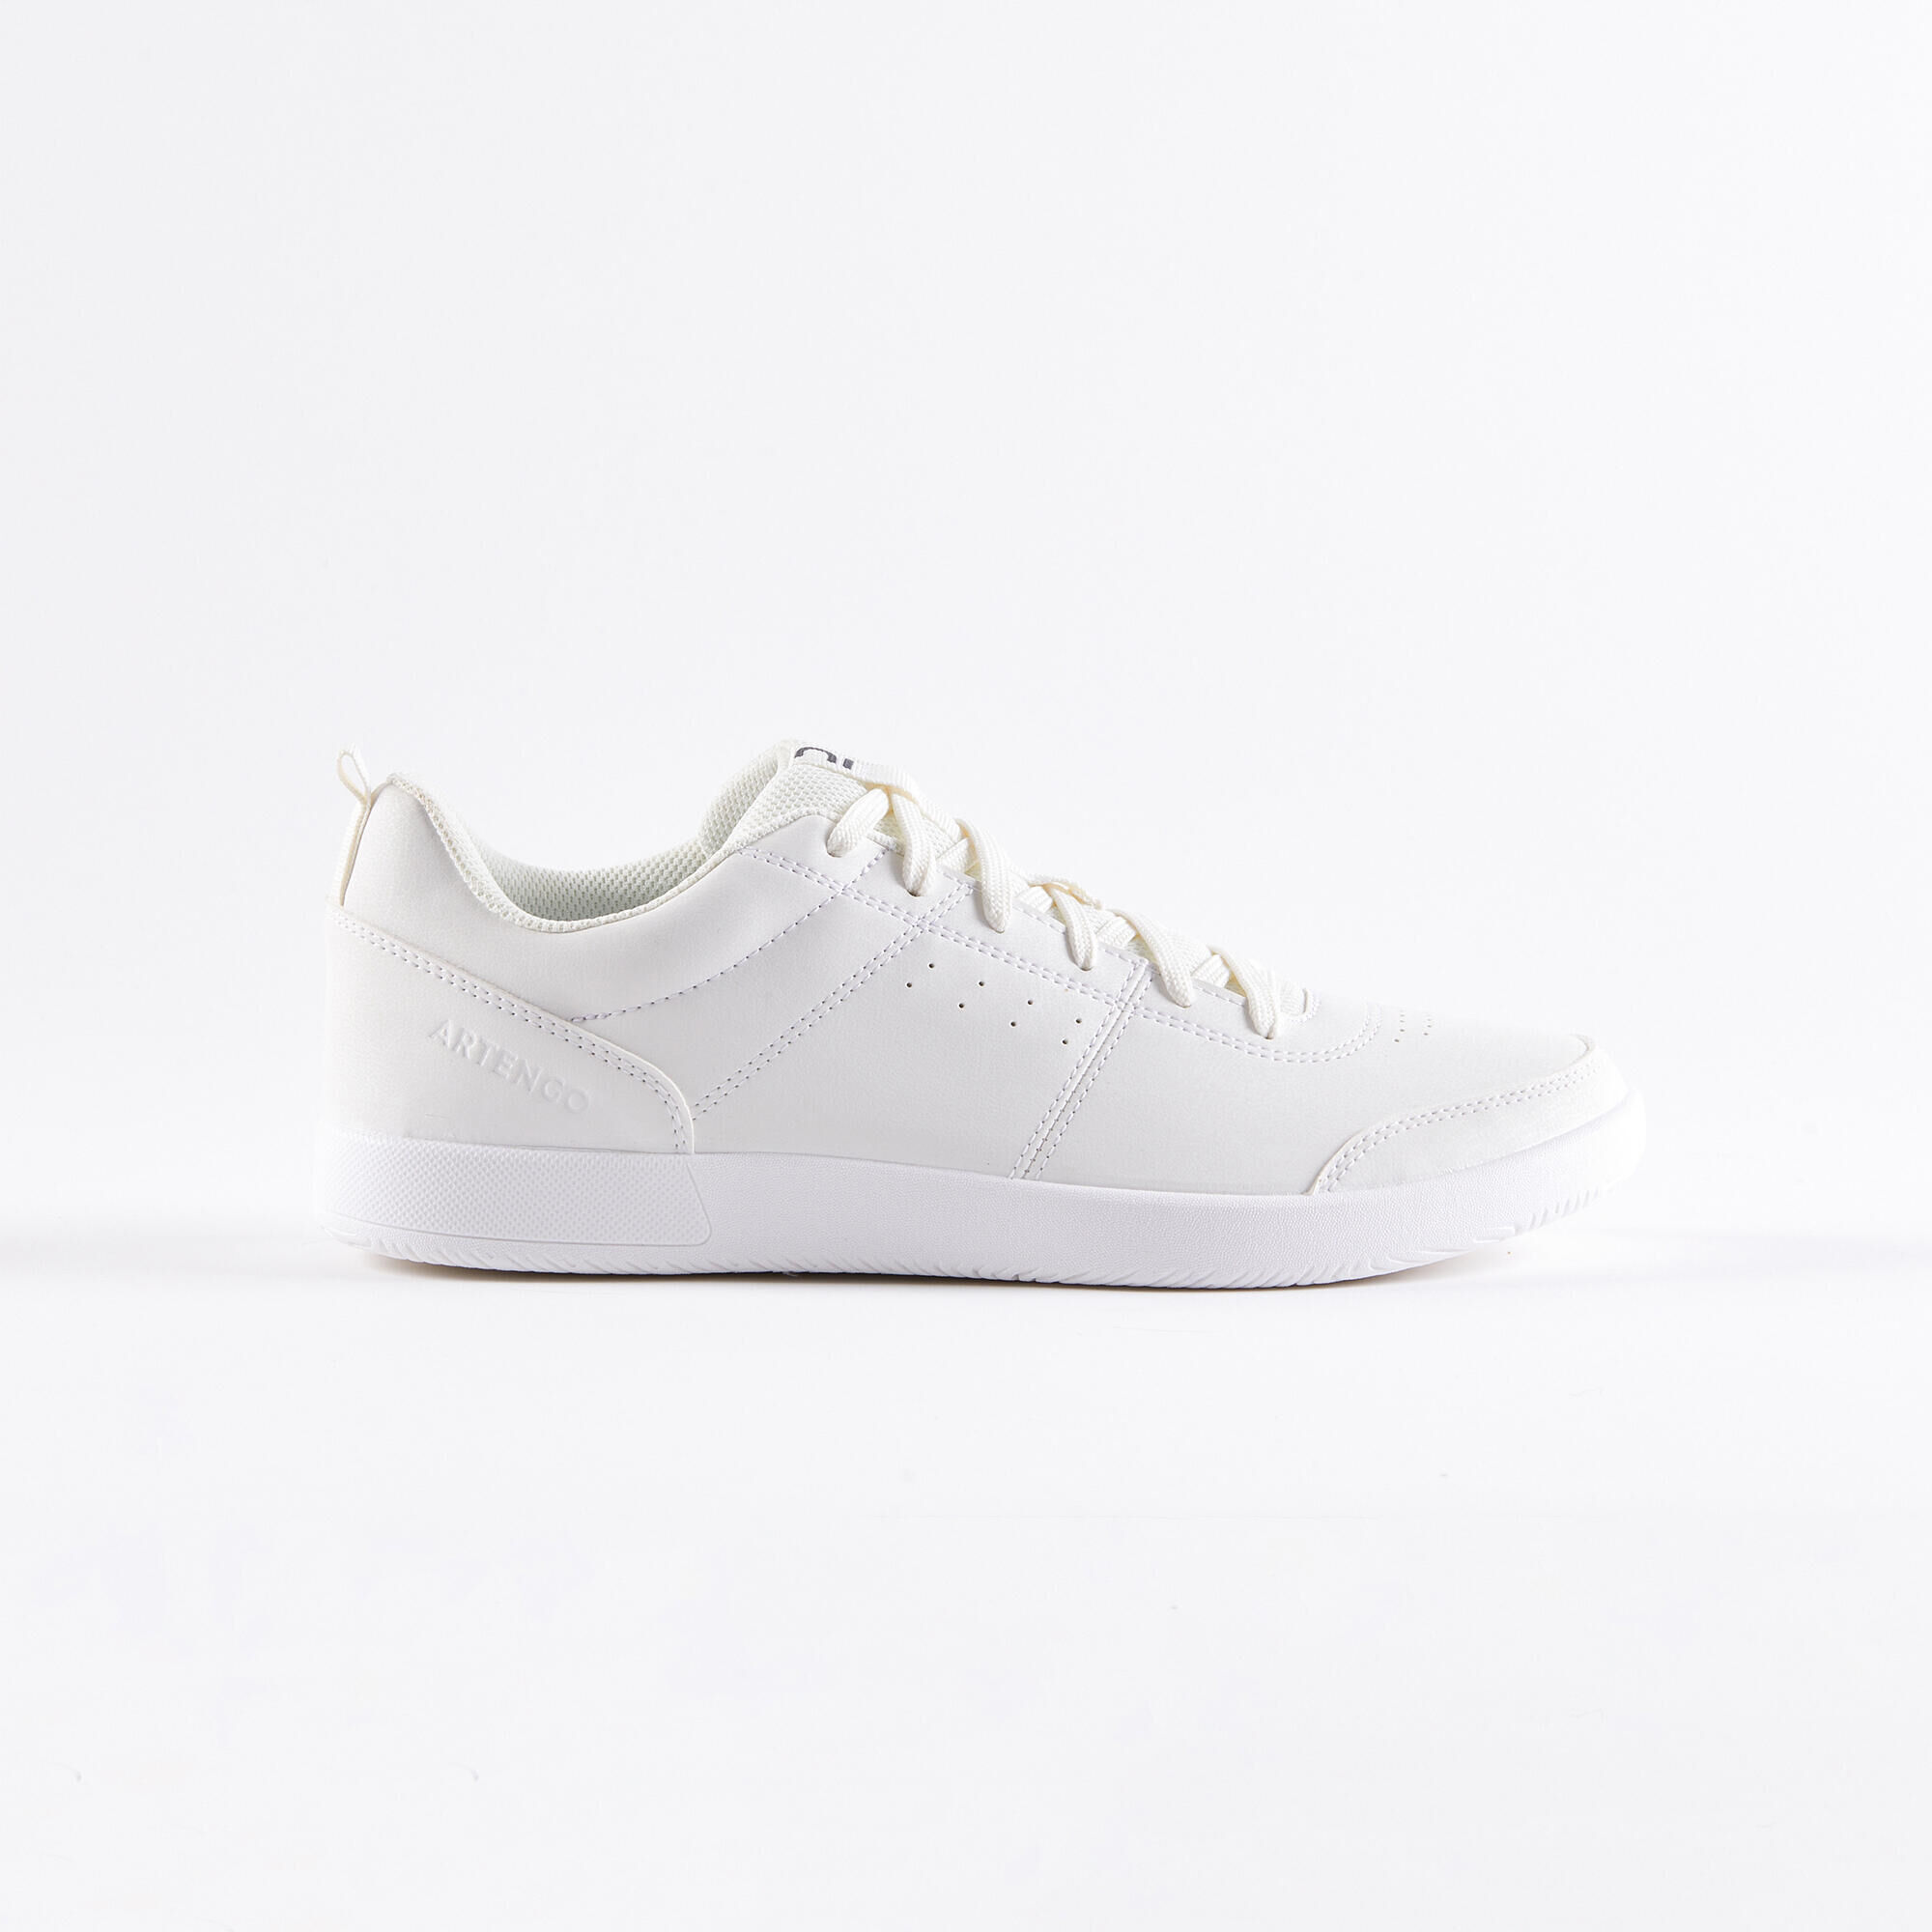 ARTENGO Men's Multi-Court Tennis Shoes Essential - Off-White